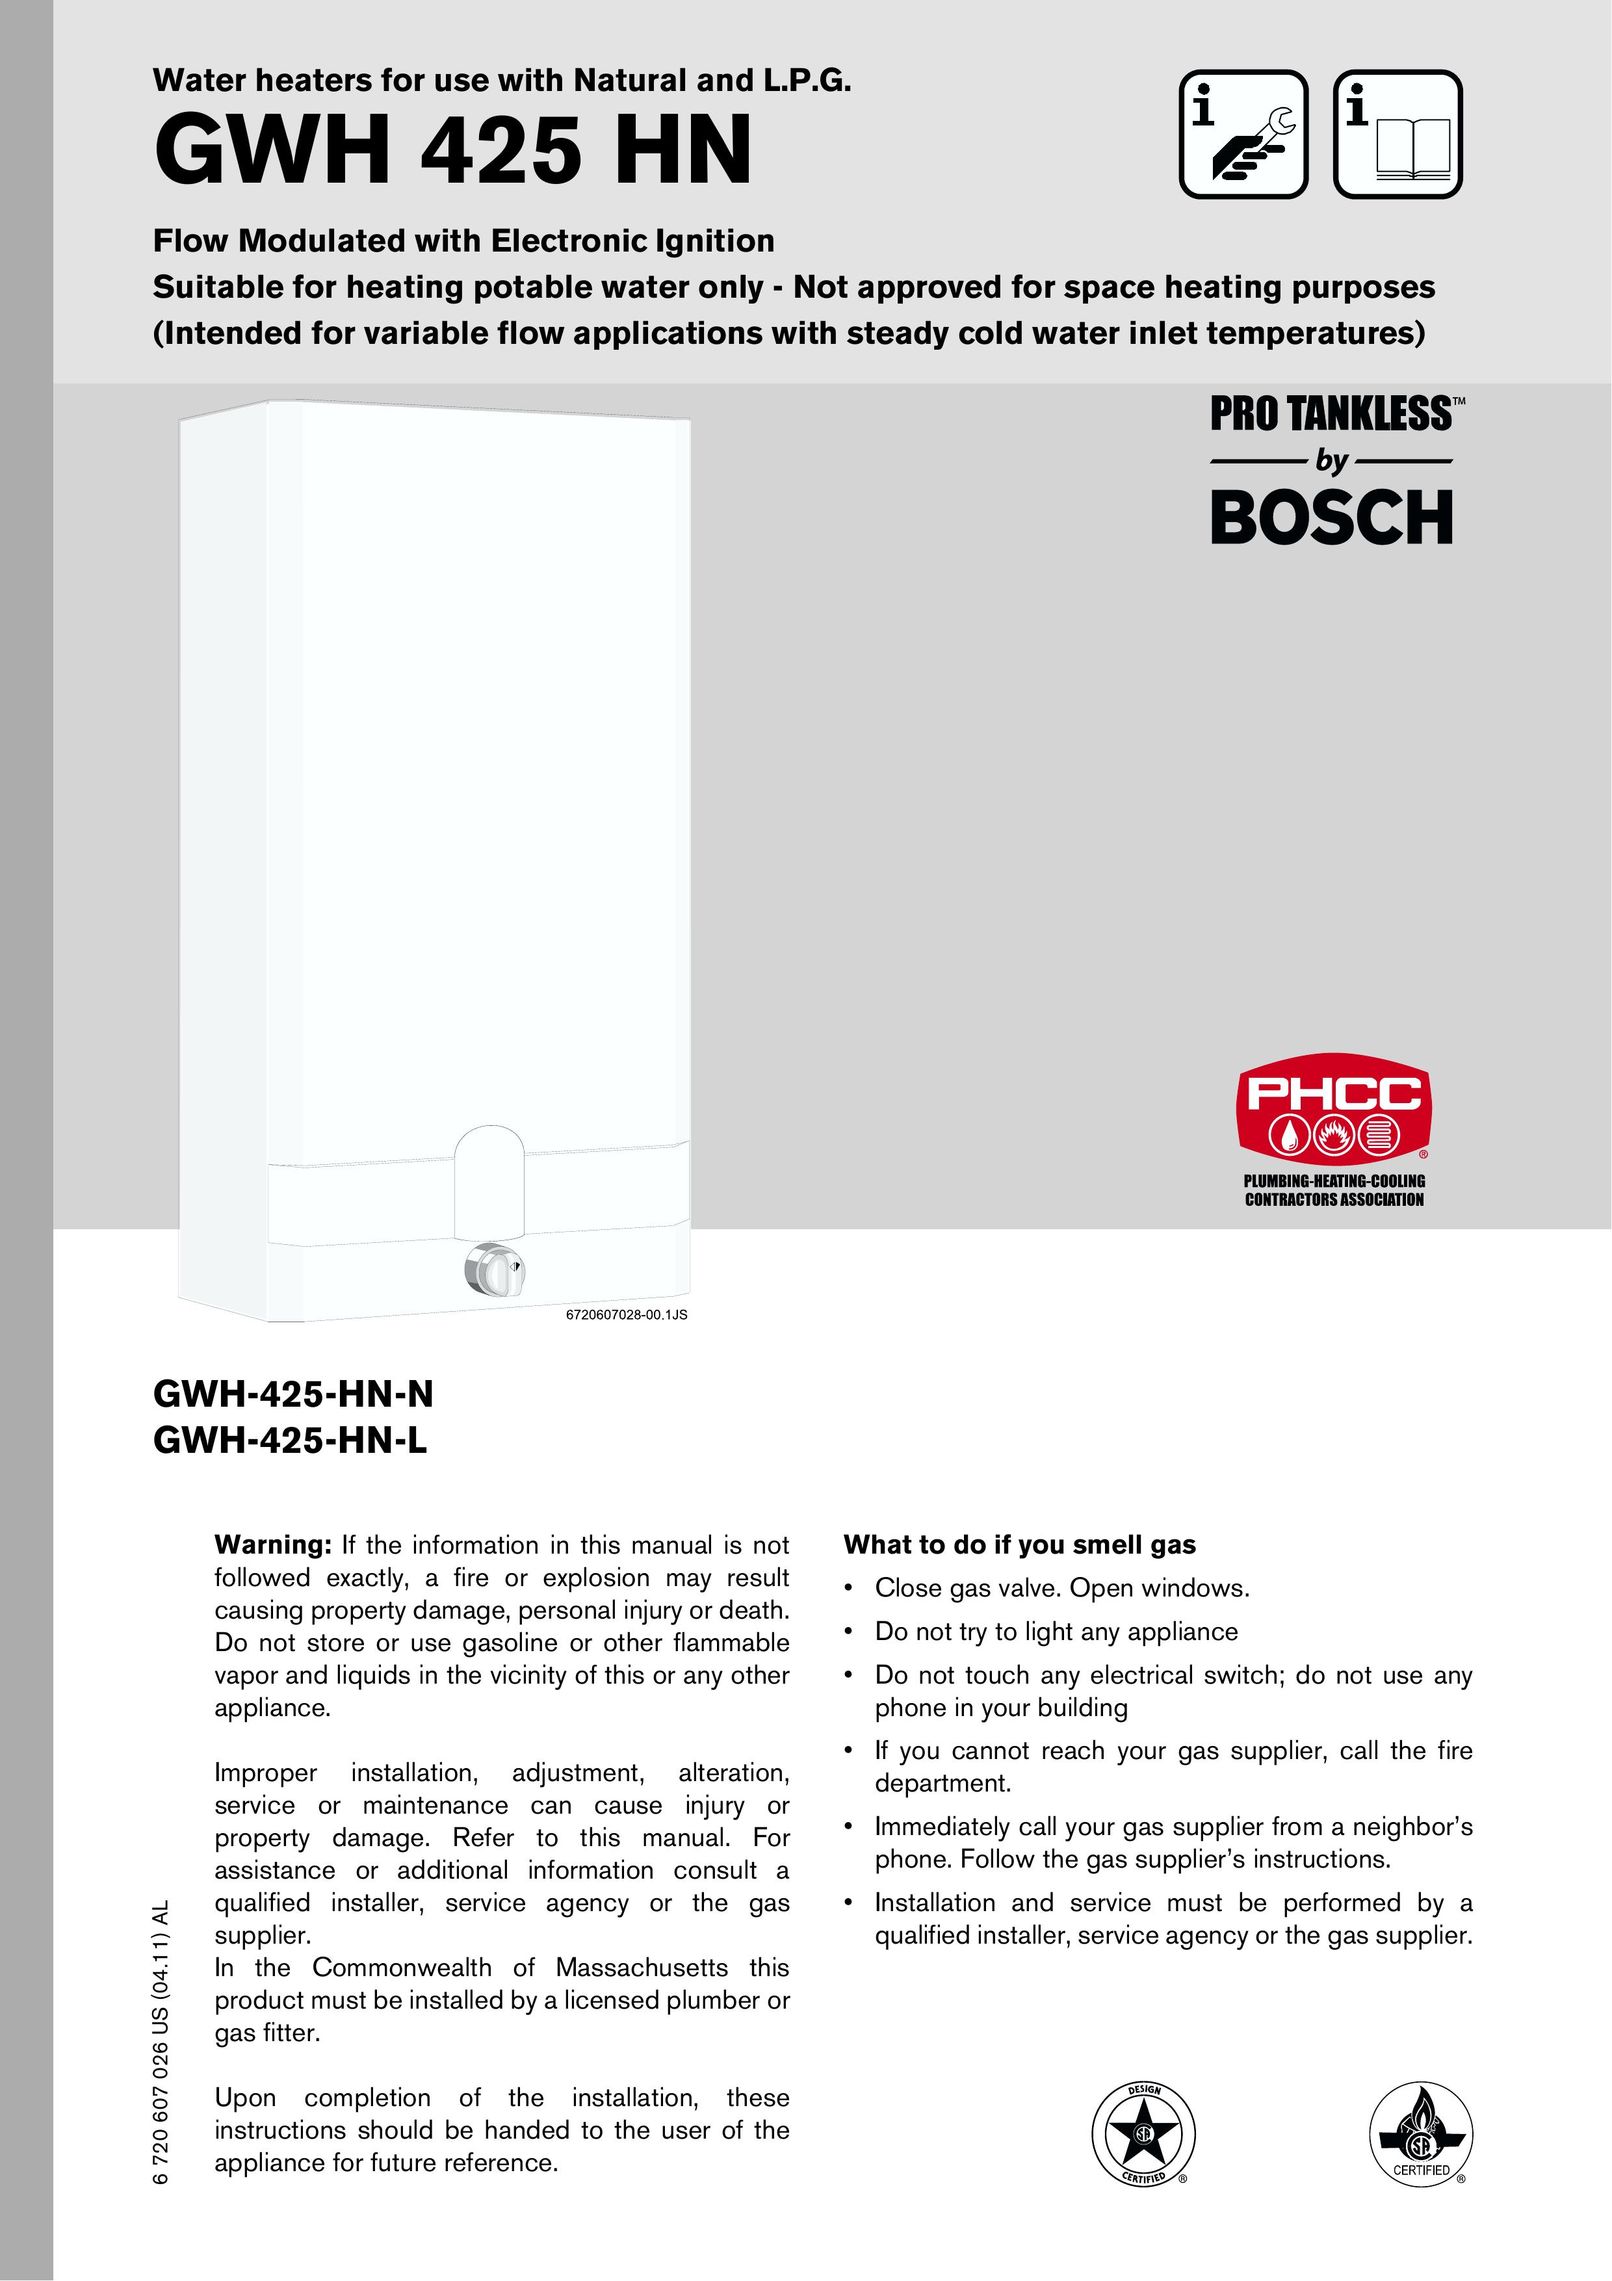 Bosch Appliances GWH 425 HN Water Heater User Manual